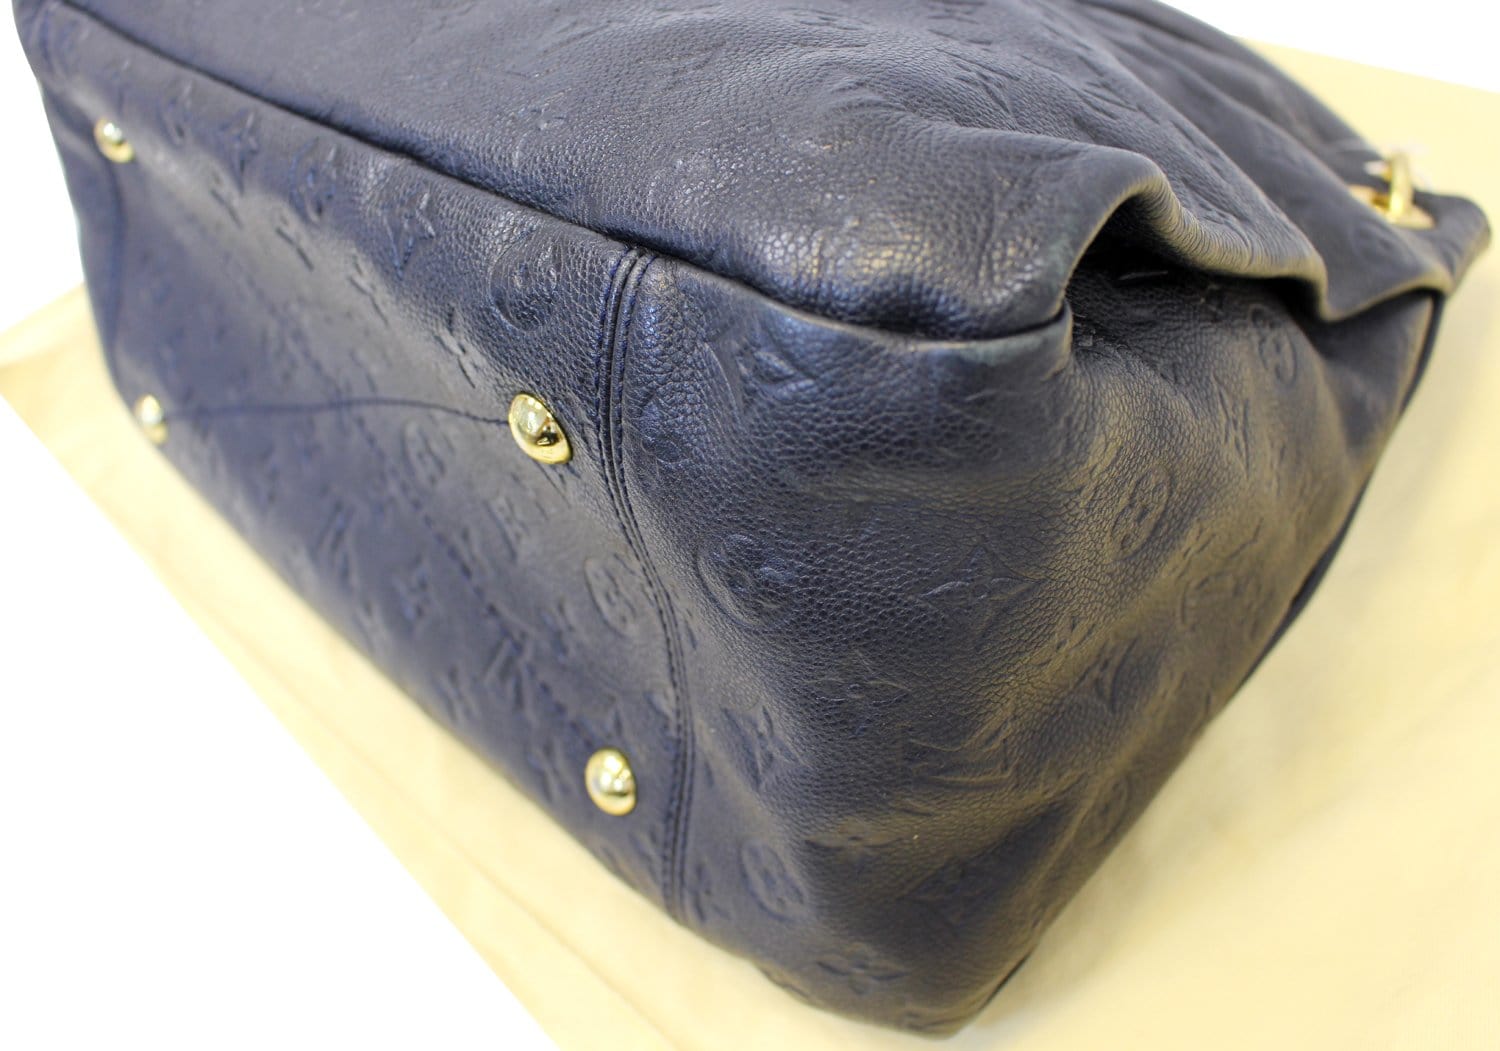 Louis Vuitton Artsy MM Hobo bag in dark blue monogram calfskin